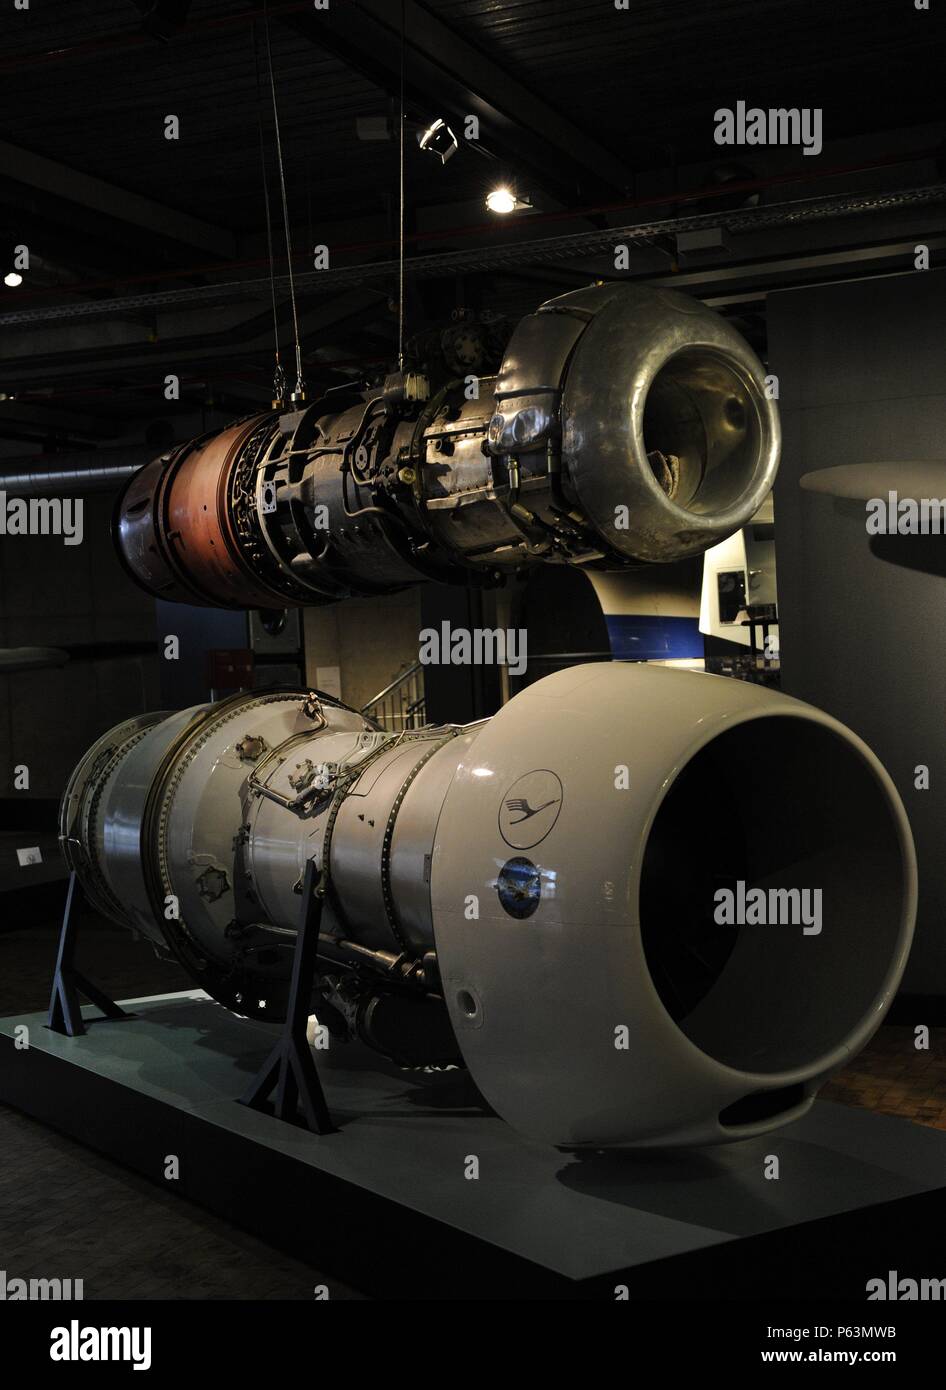 HISTORIA AVIACION. Turborreactor norteamericano moteur Pratt & Whitney JT 3 años Década (50 ans). Turborreactor alemán moteur BMW003 (Década años 40's). Deutsches Technikmuseum. Berlin. Alemania. Banque D'Images